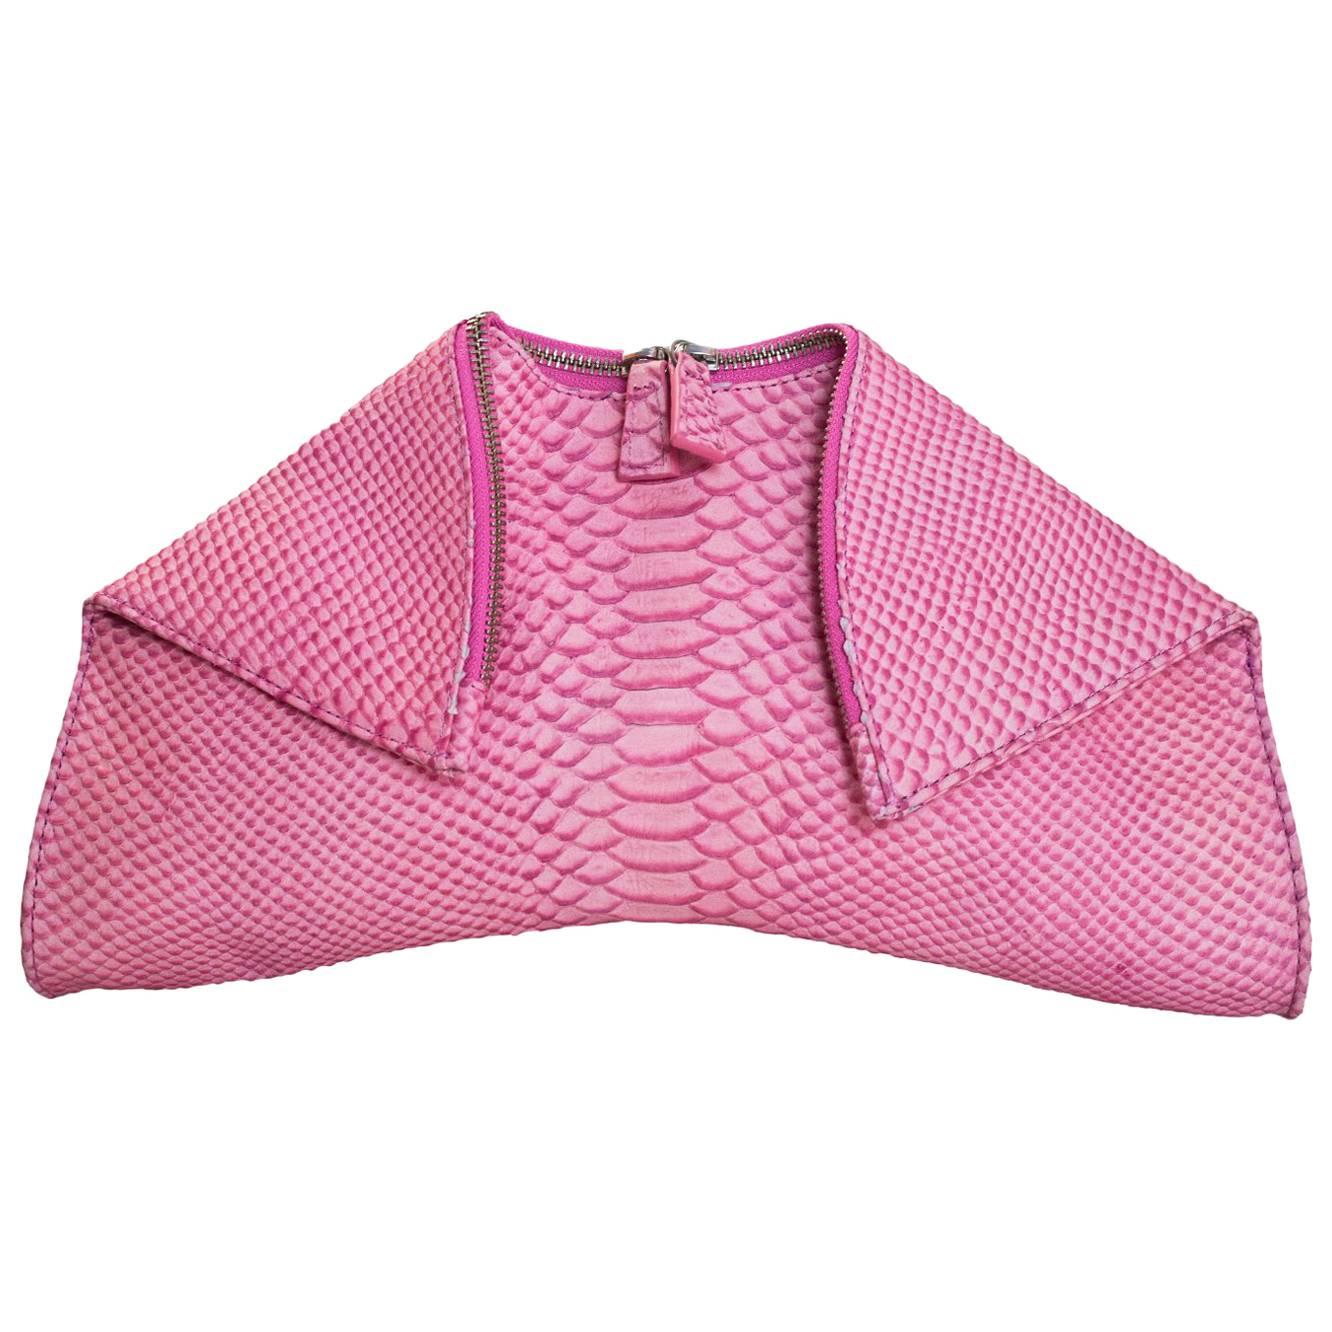 Emily Cho Pink Embossed Snakeskin Folded Clutch Bag,